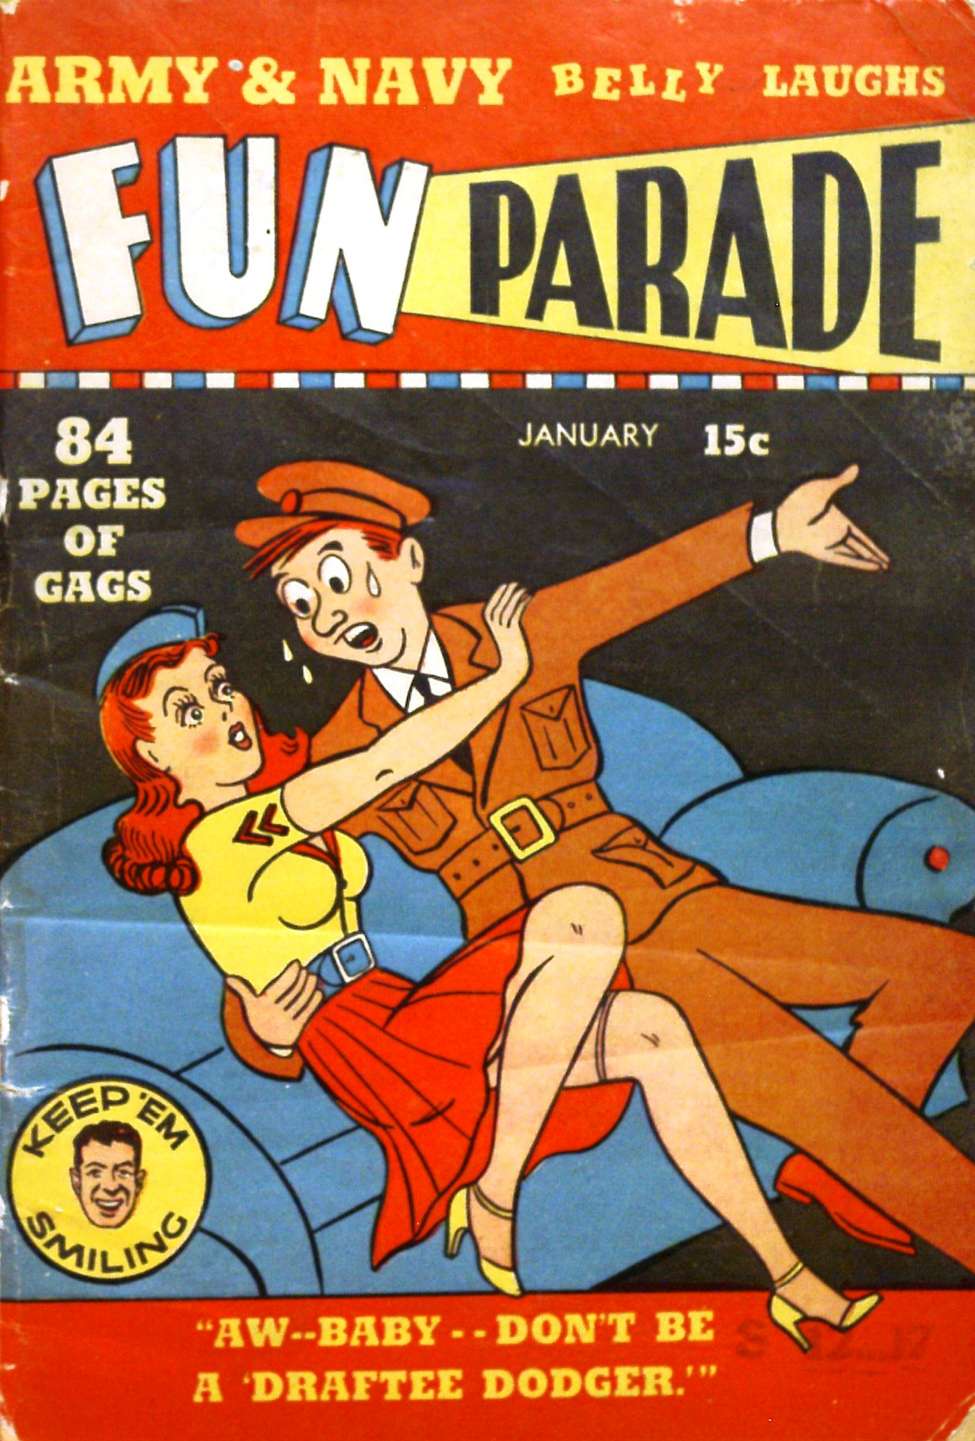 Book Cover For Army & Navy Fun Parade 2